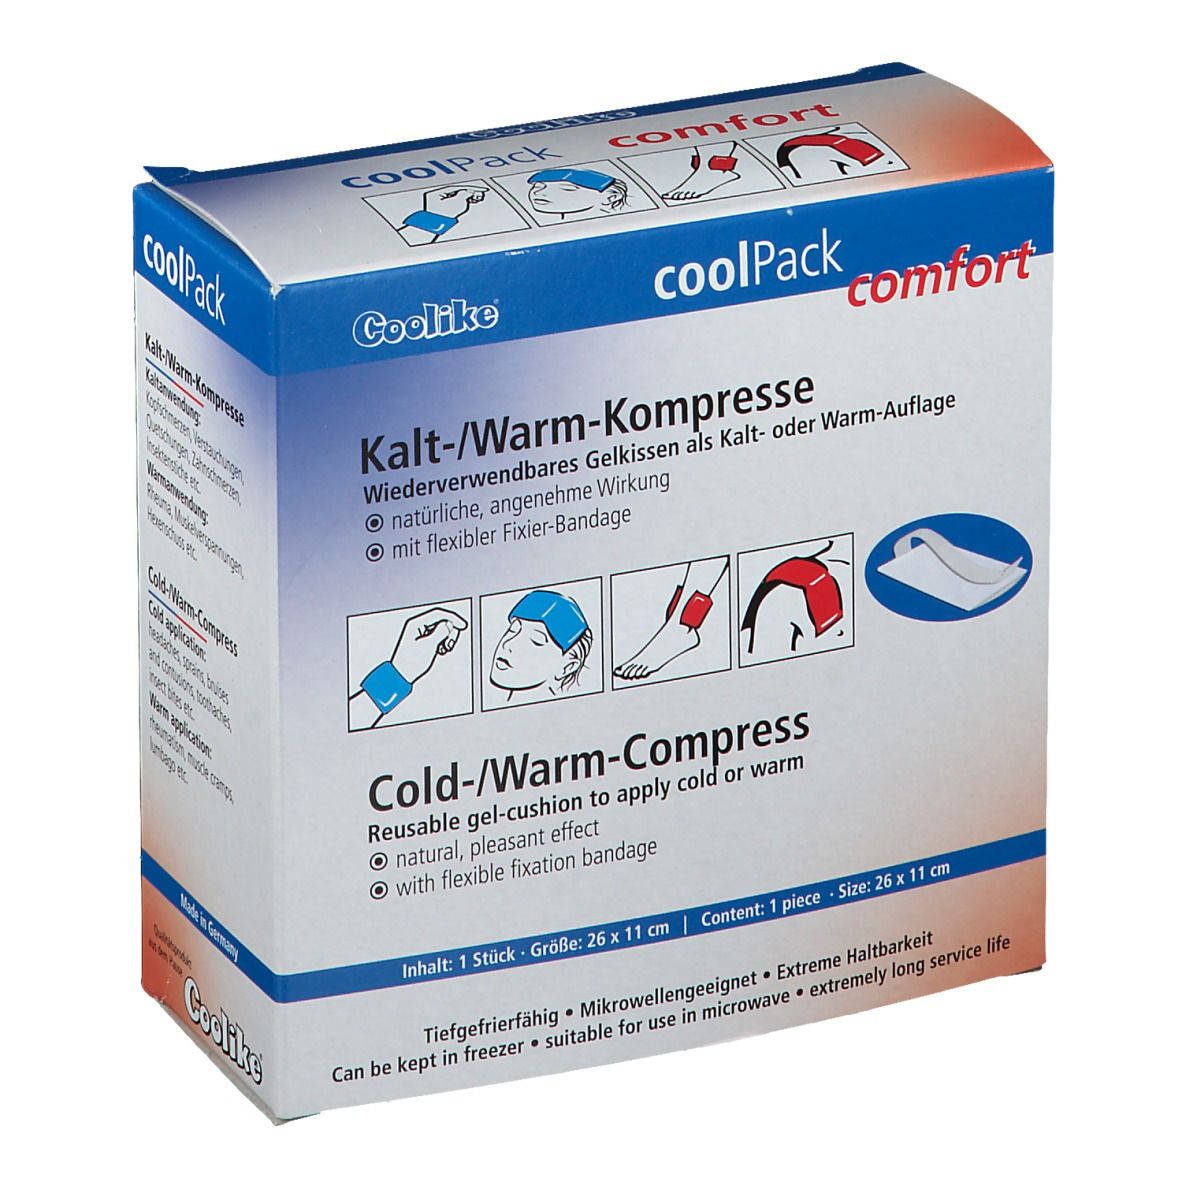 coolPack comfort Kalt-/Warm-Kompresse